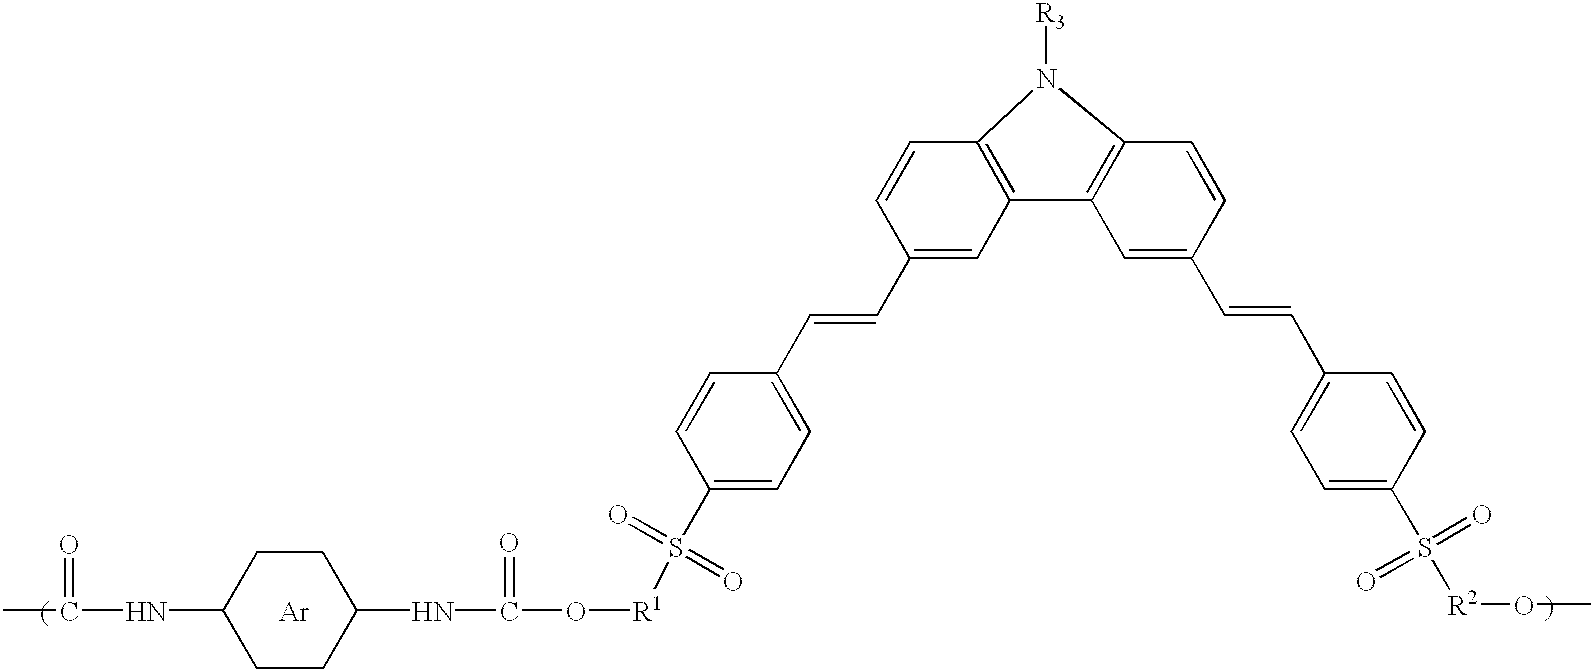 Lambda-shaped carbazole and main-chain NLO polyurethane containing the same